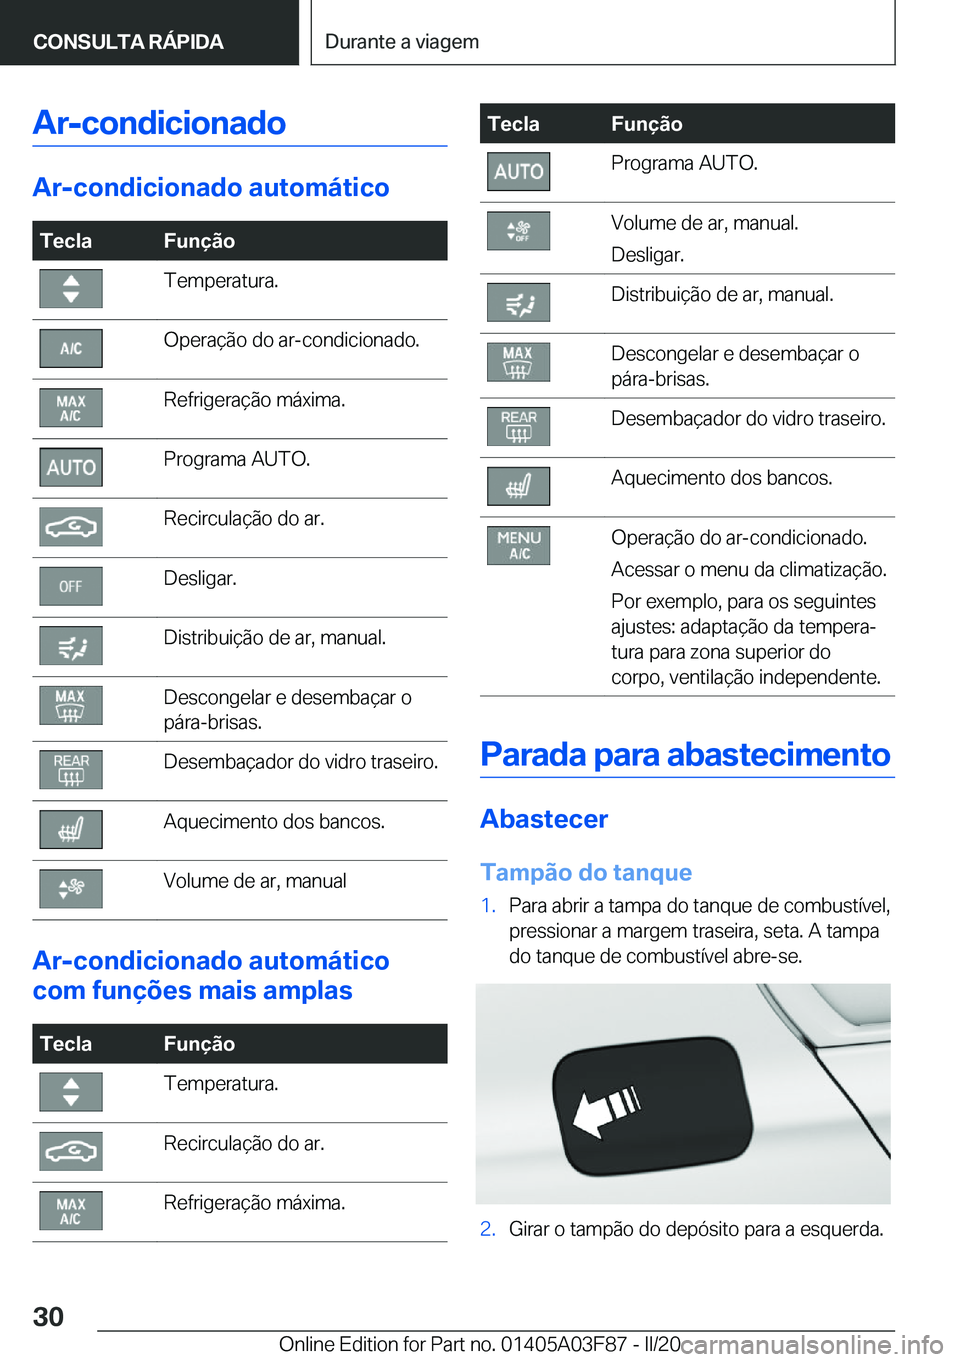 BMW 3 SERIES 2020  Manual do condutor (in Portuguese) �A�r�-�c�o�n�d�i�c�i�o�n�a�d�o
�A�r�-�c�o�n�d�i�c�i�o�n�a�d�o��a�u�t�o�m�á�t�i�c�o
�T�e�c�l�a�F�u�n�